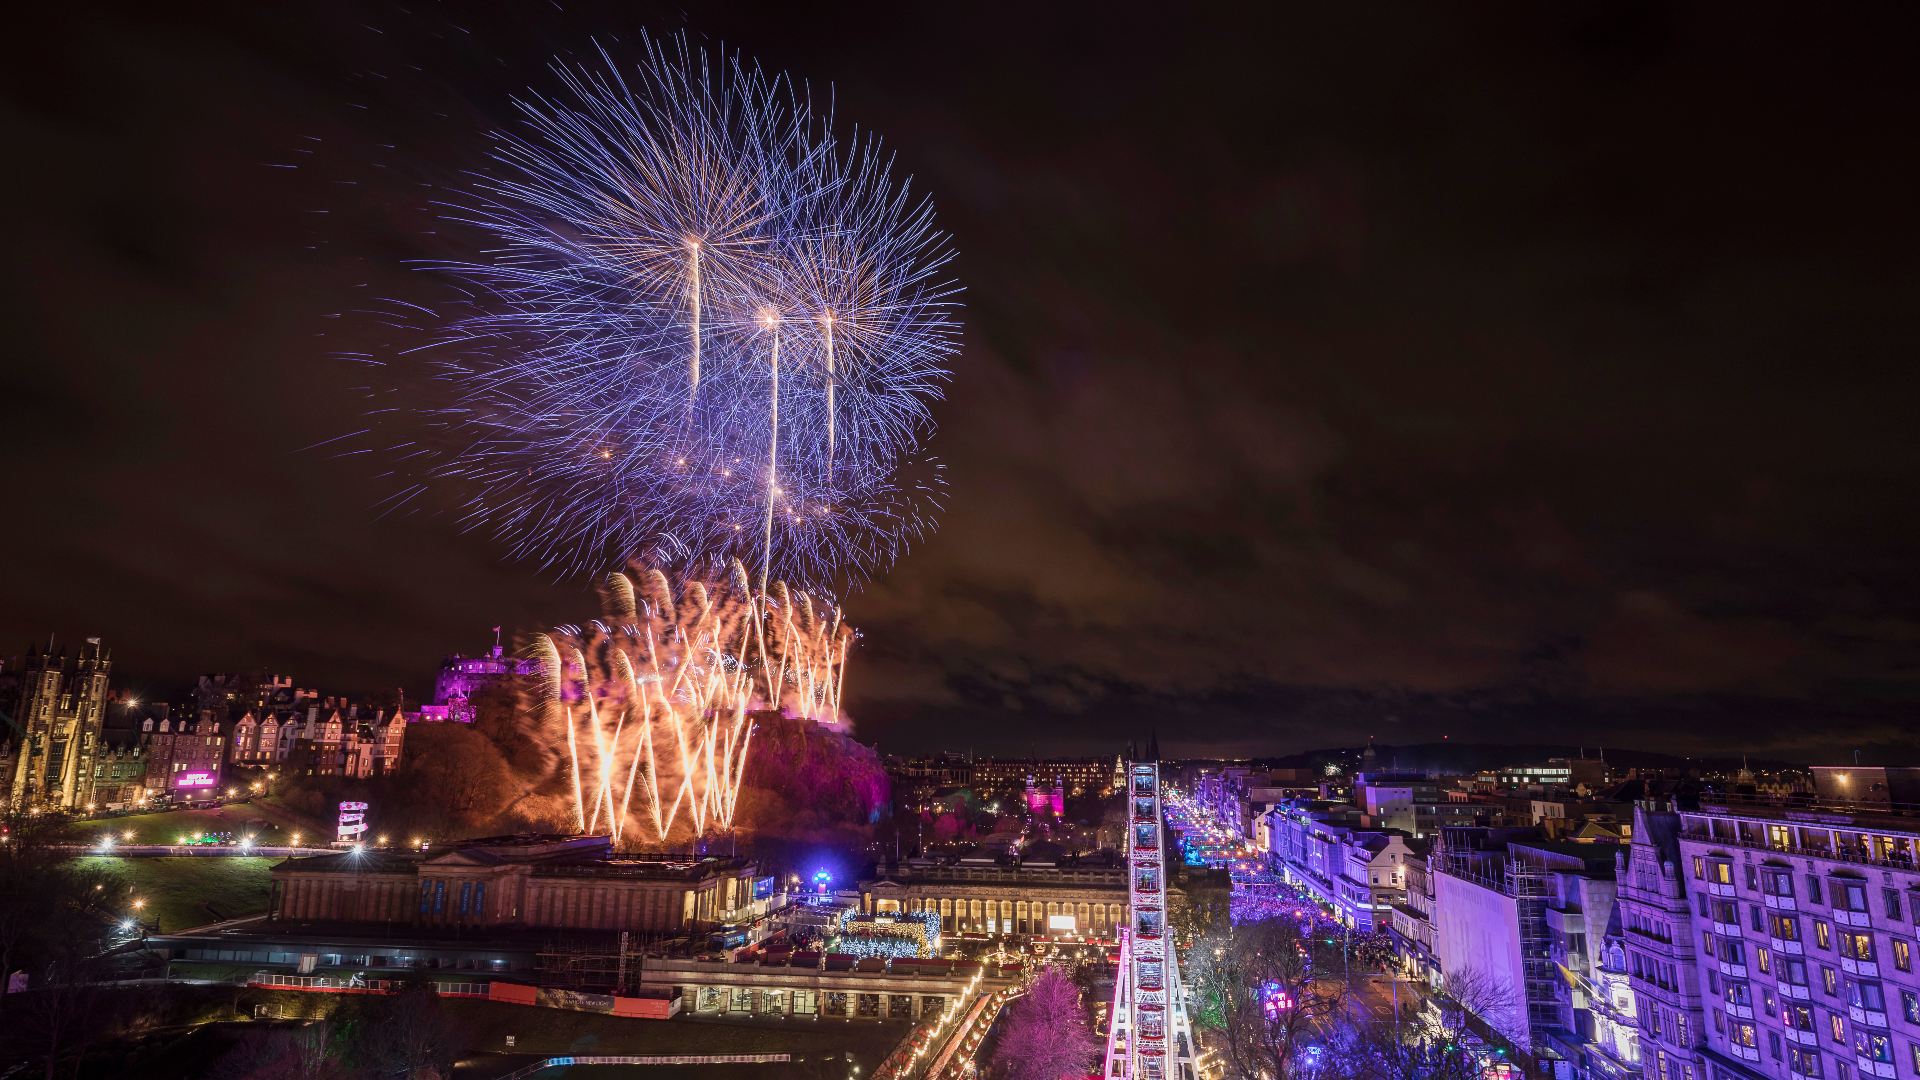 Hogmanay fireworks at the Edinburgh street party, Scotland ©Kenny Lam – Visit Scotland